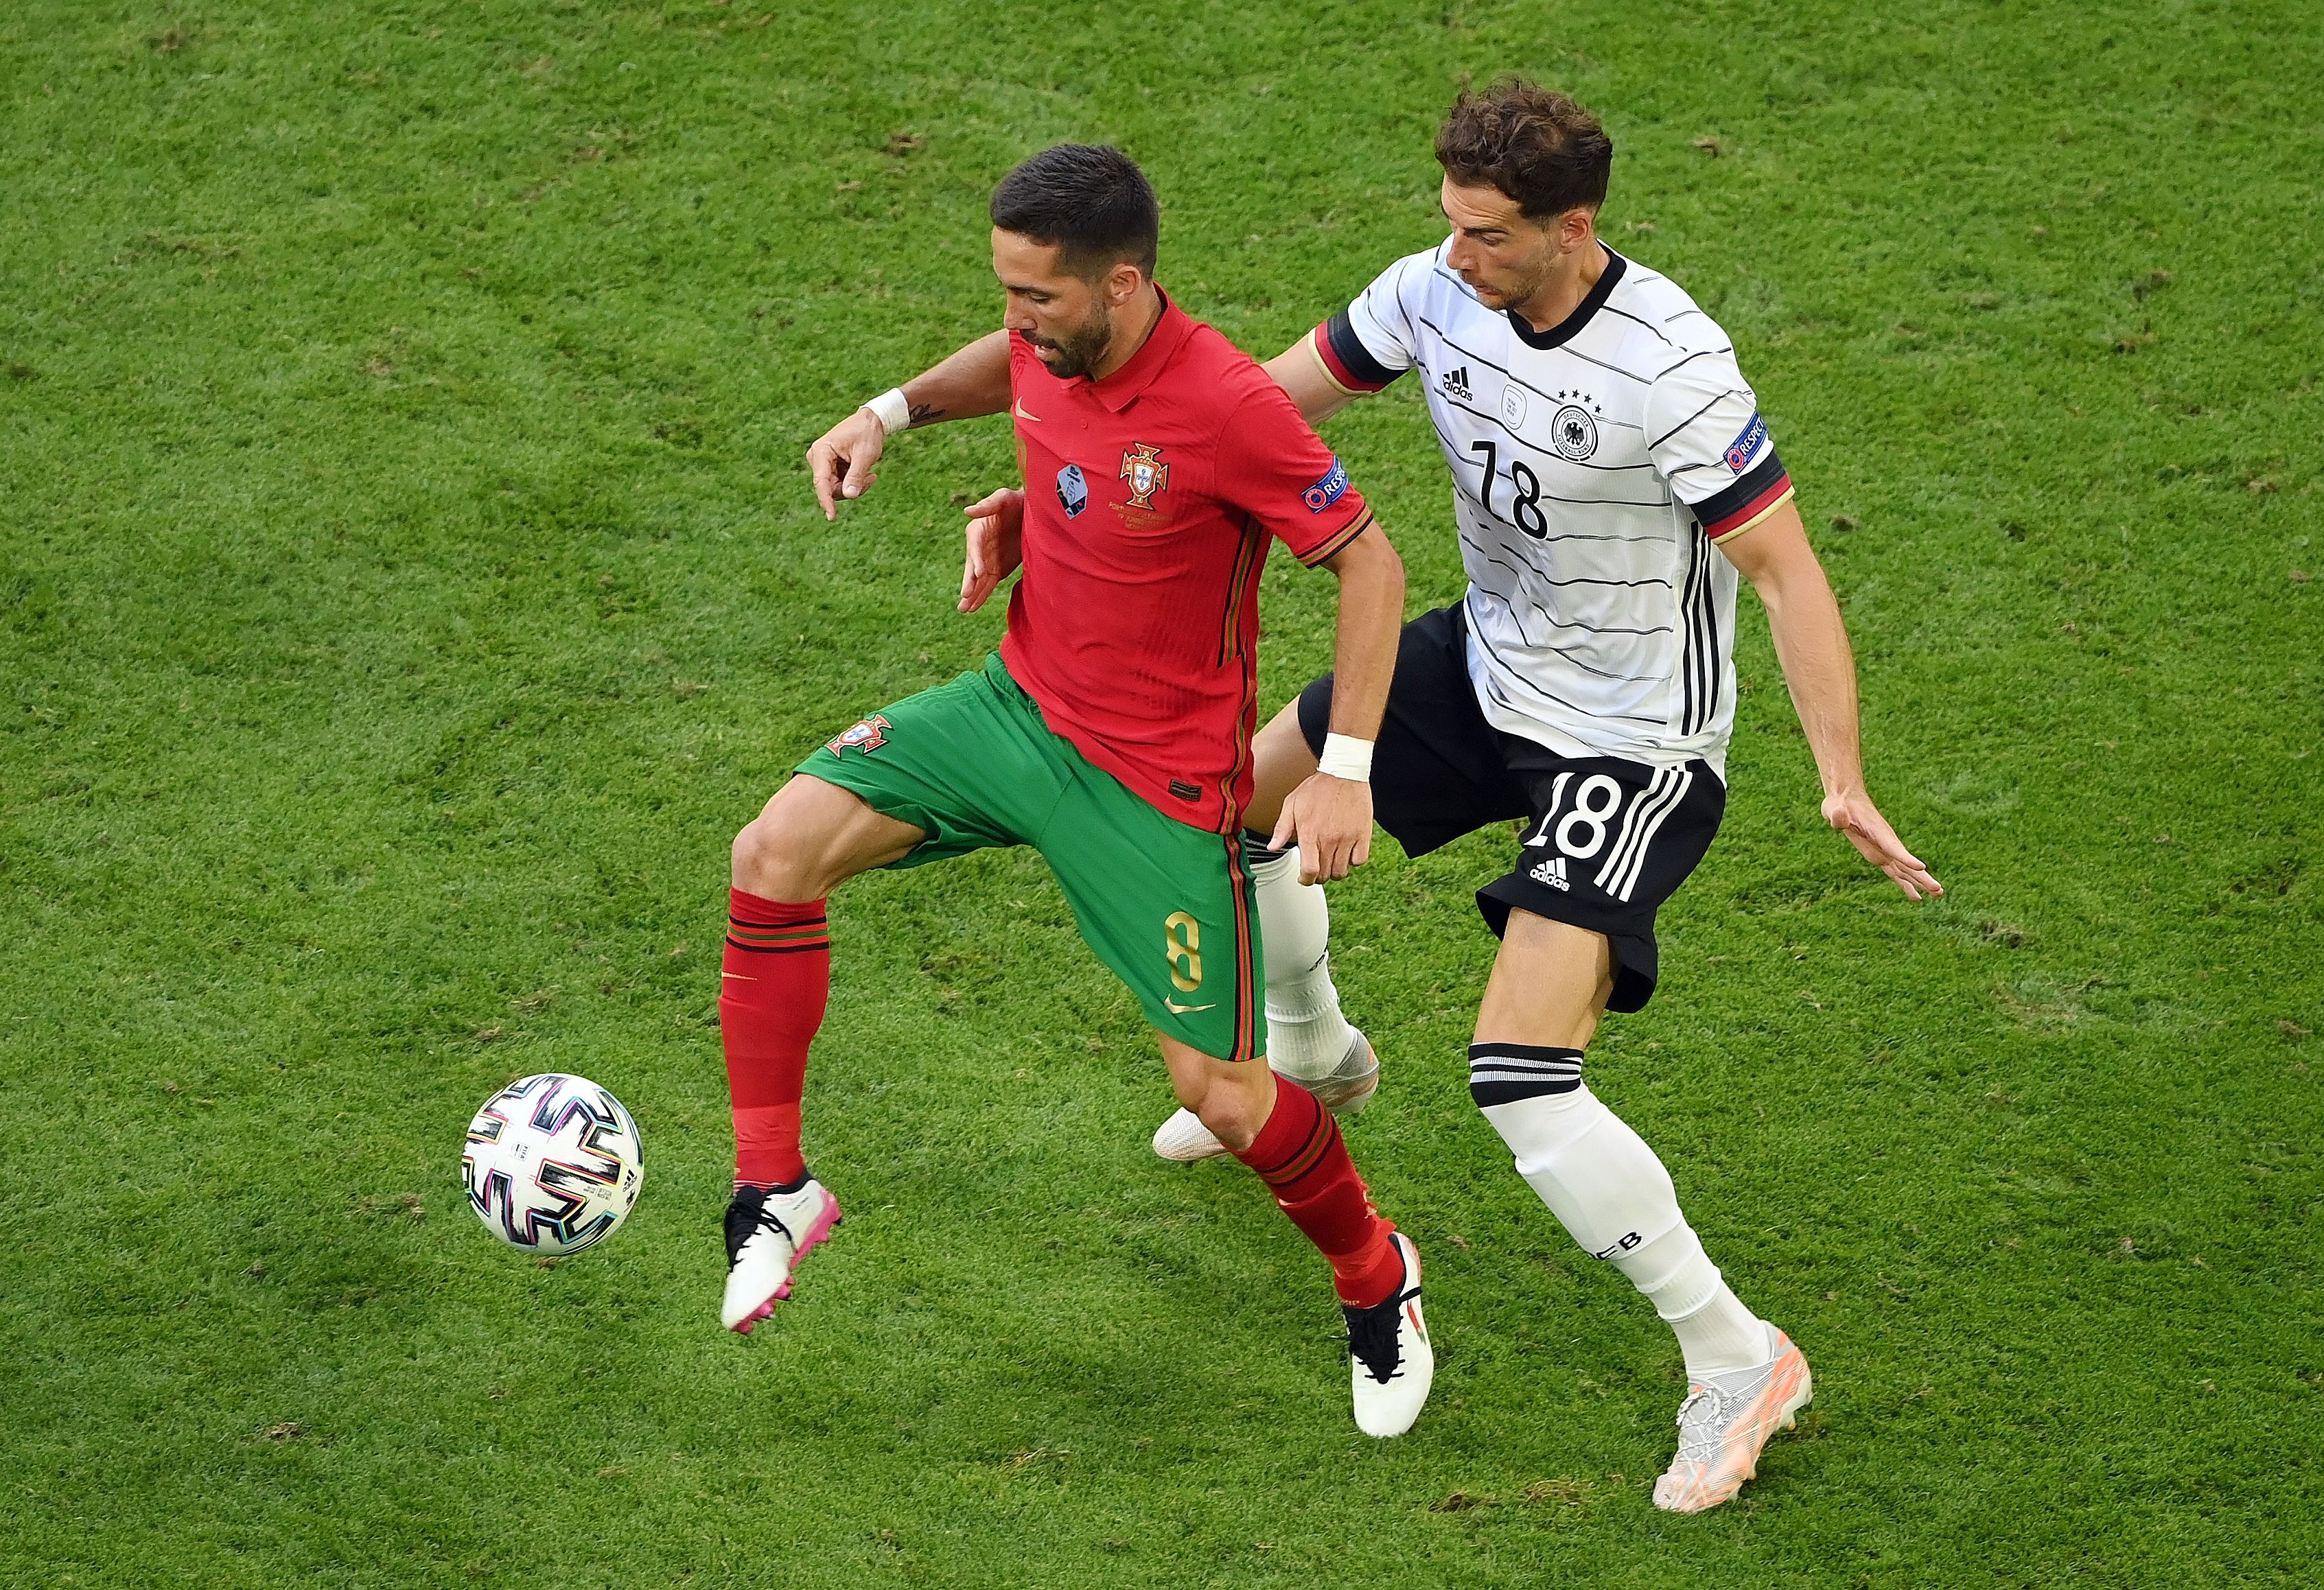 Portugal vs germany euro 2021